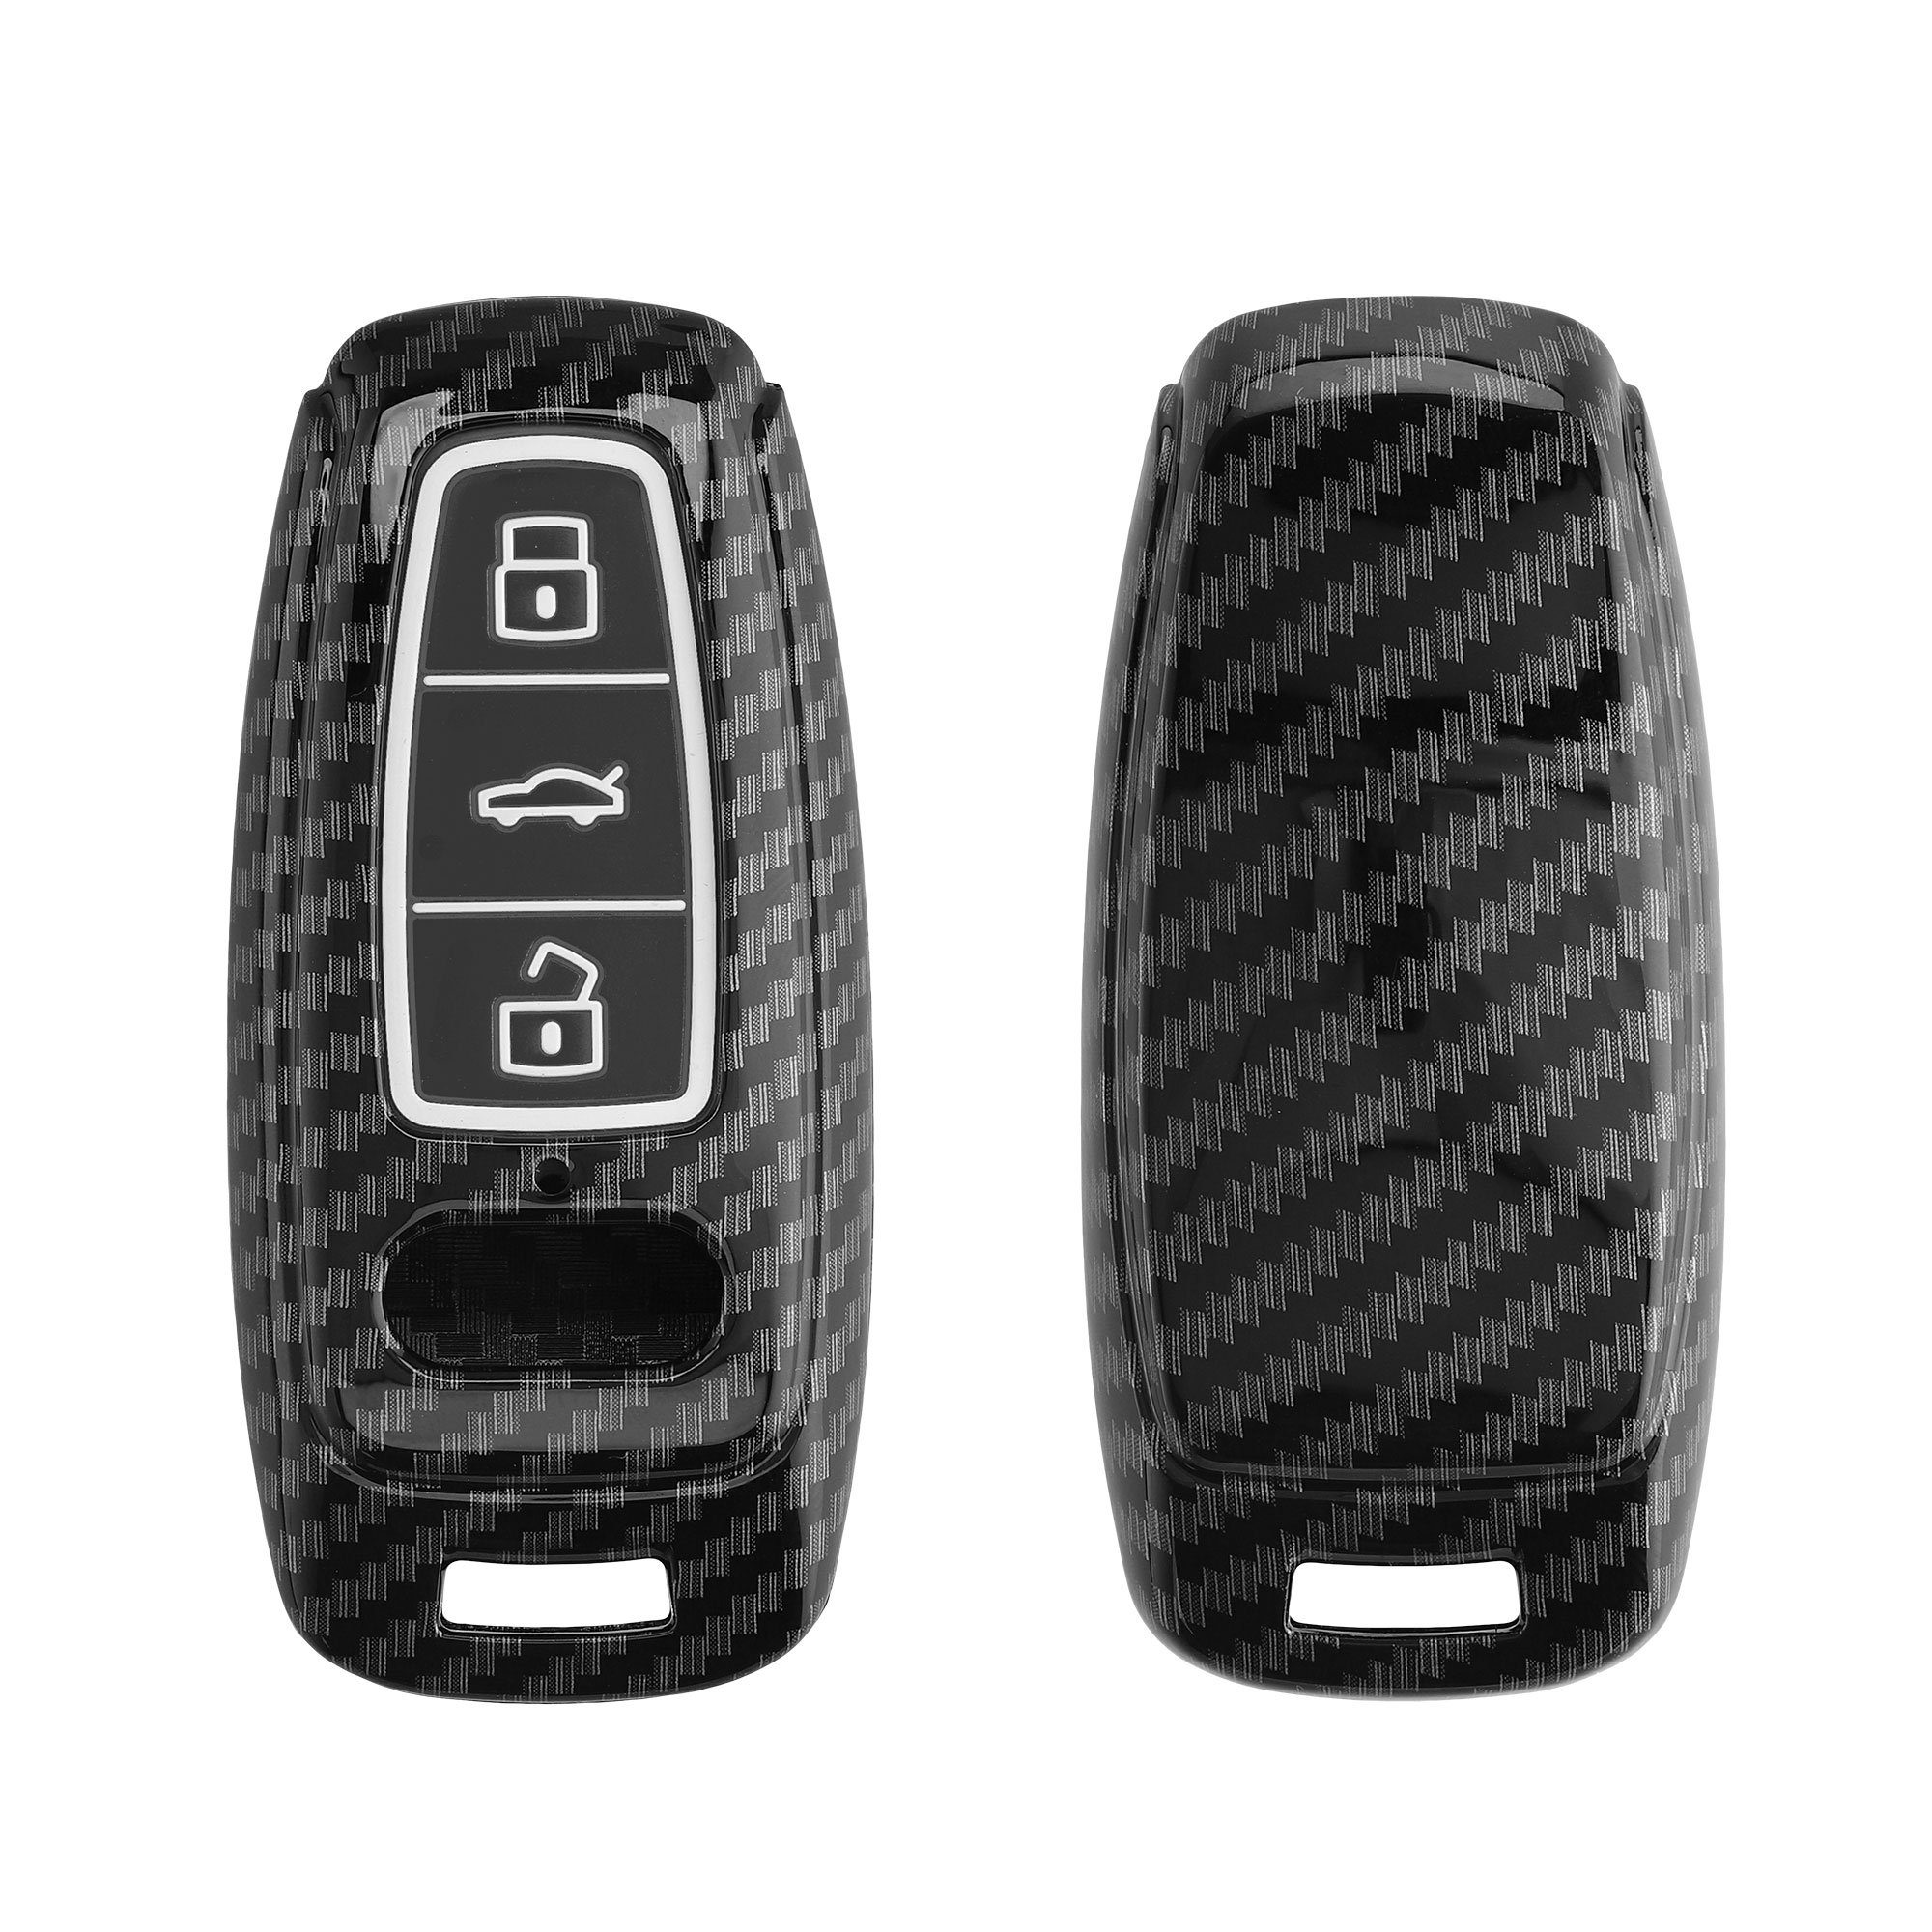 Hülle Schwarz Q7 für A8 Schlüsselhülle Schlüsseltasche A6 - Schutzhülle Case Autoschlüssel Q8, Hardcover A7 kwmobile Cover Audi